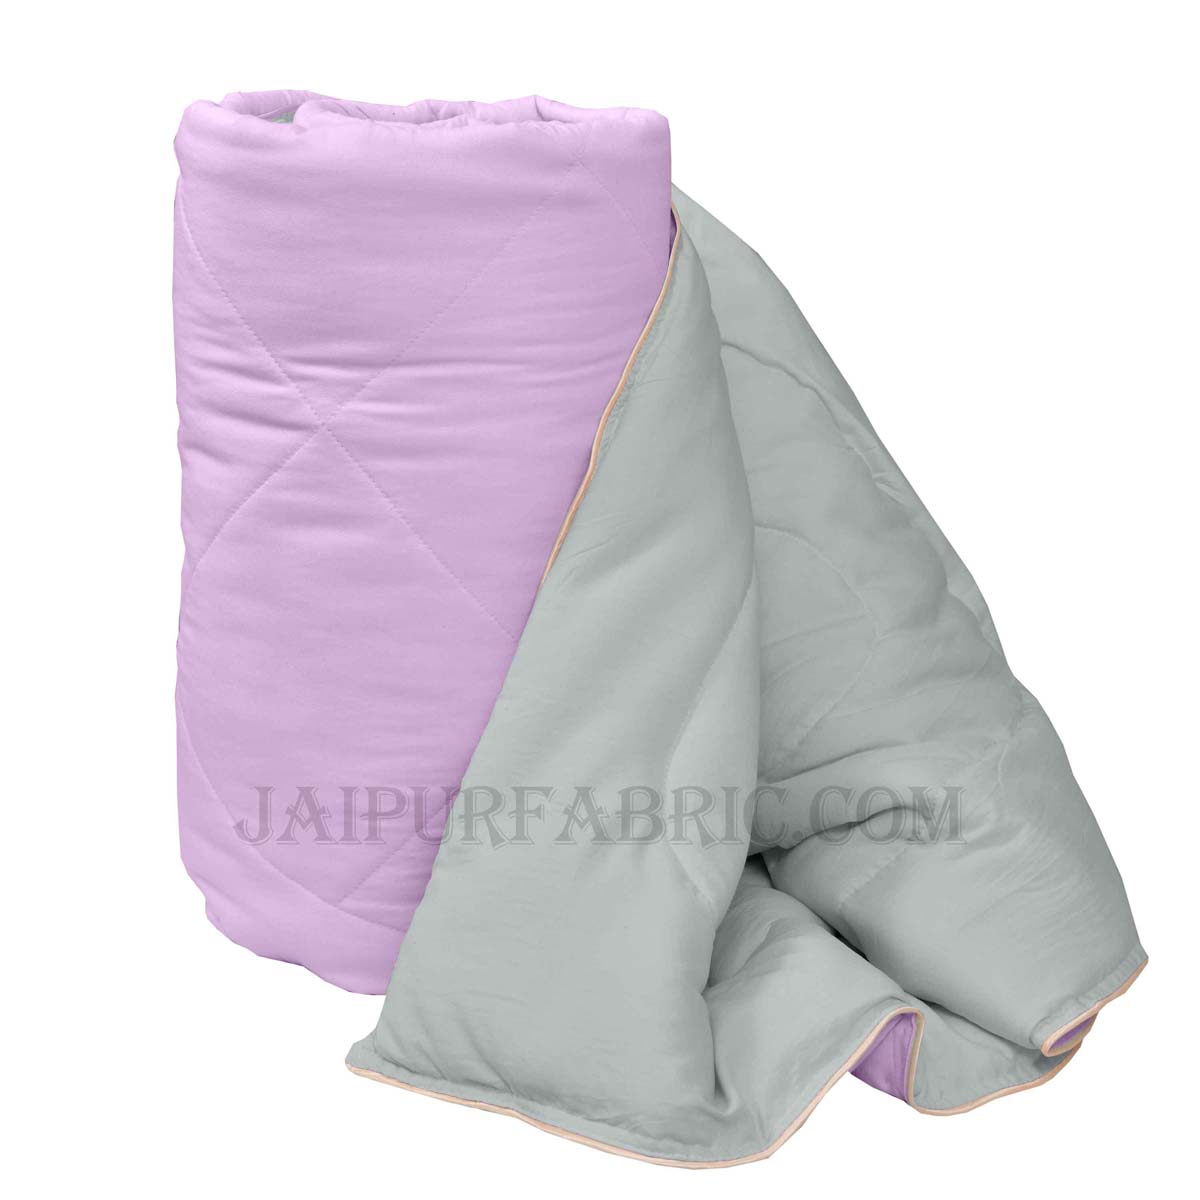 Ultra Soft Fluffy Reversible Purple Grey Dual Tone Pure Cotton Cover Premium Micro Fibre Filling Double Bed Comforter